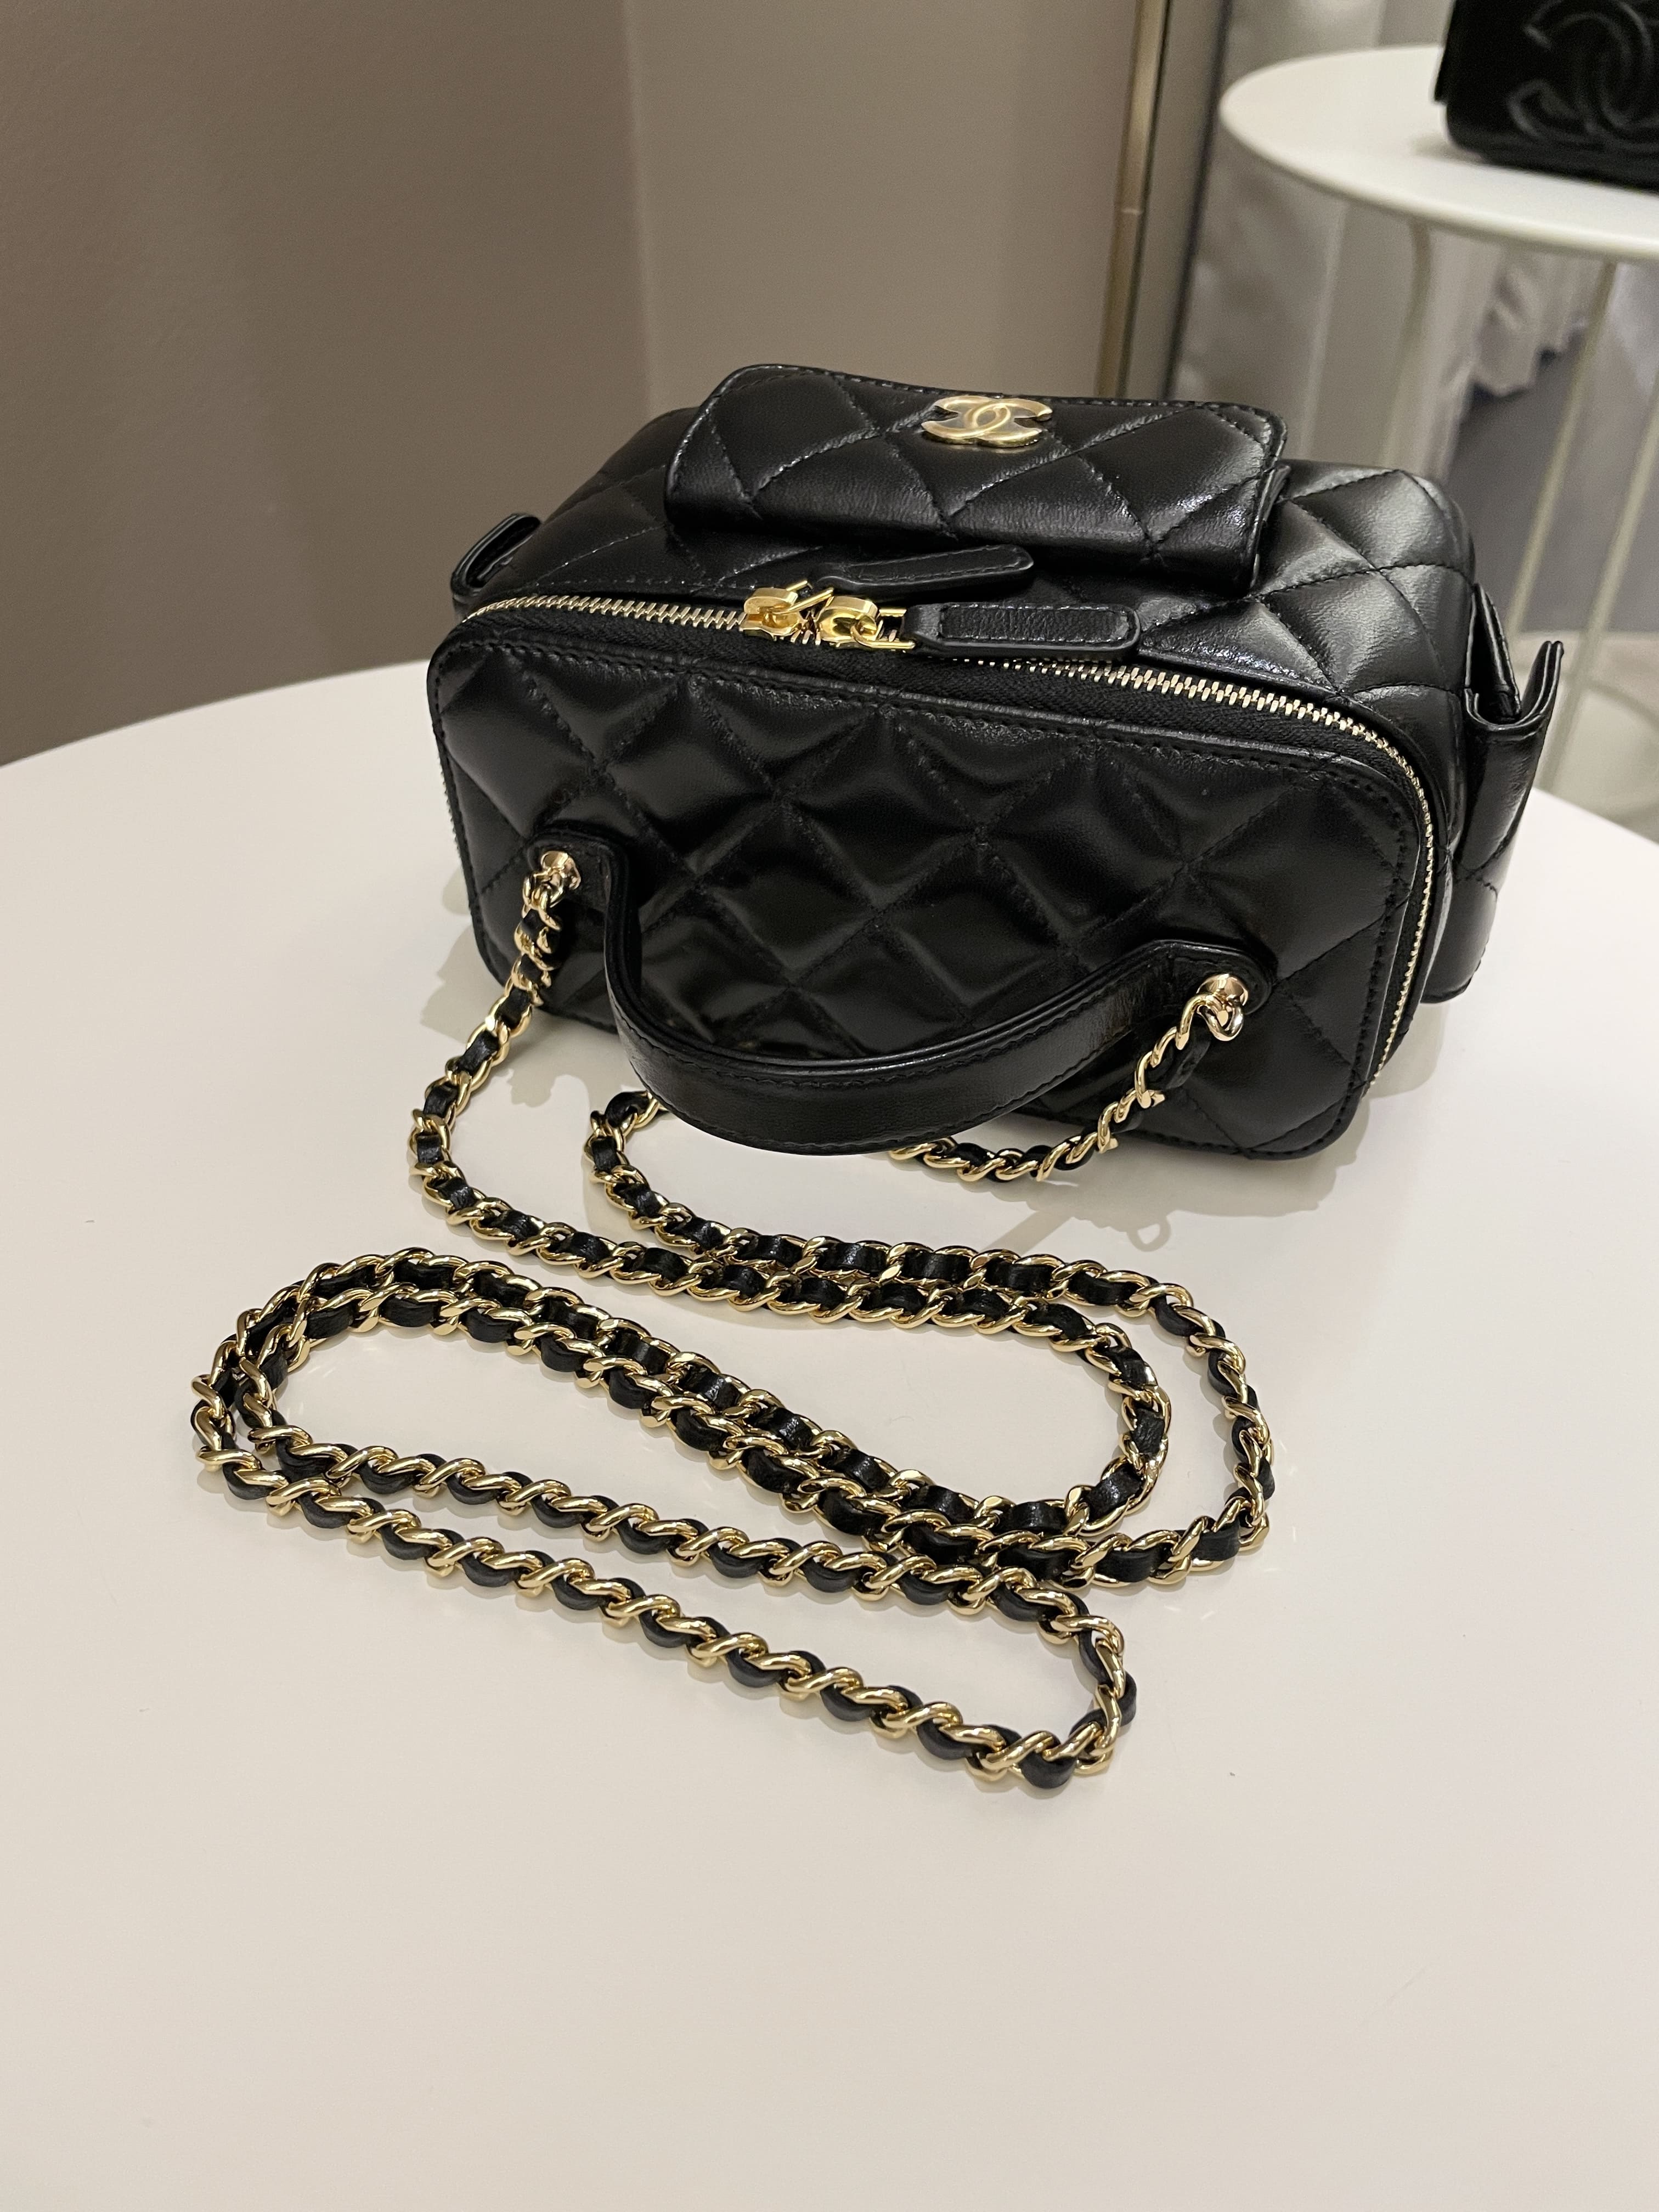 Chanel Polly Pocket Multi Pocket Vanity Case Bag Black Lambskin